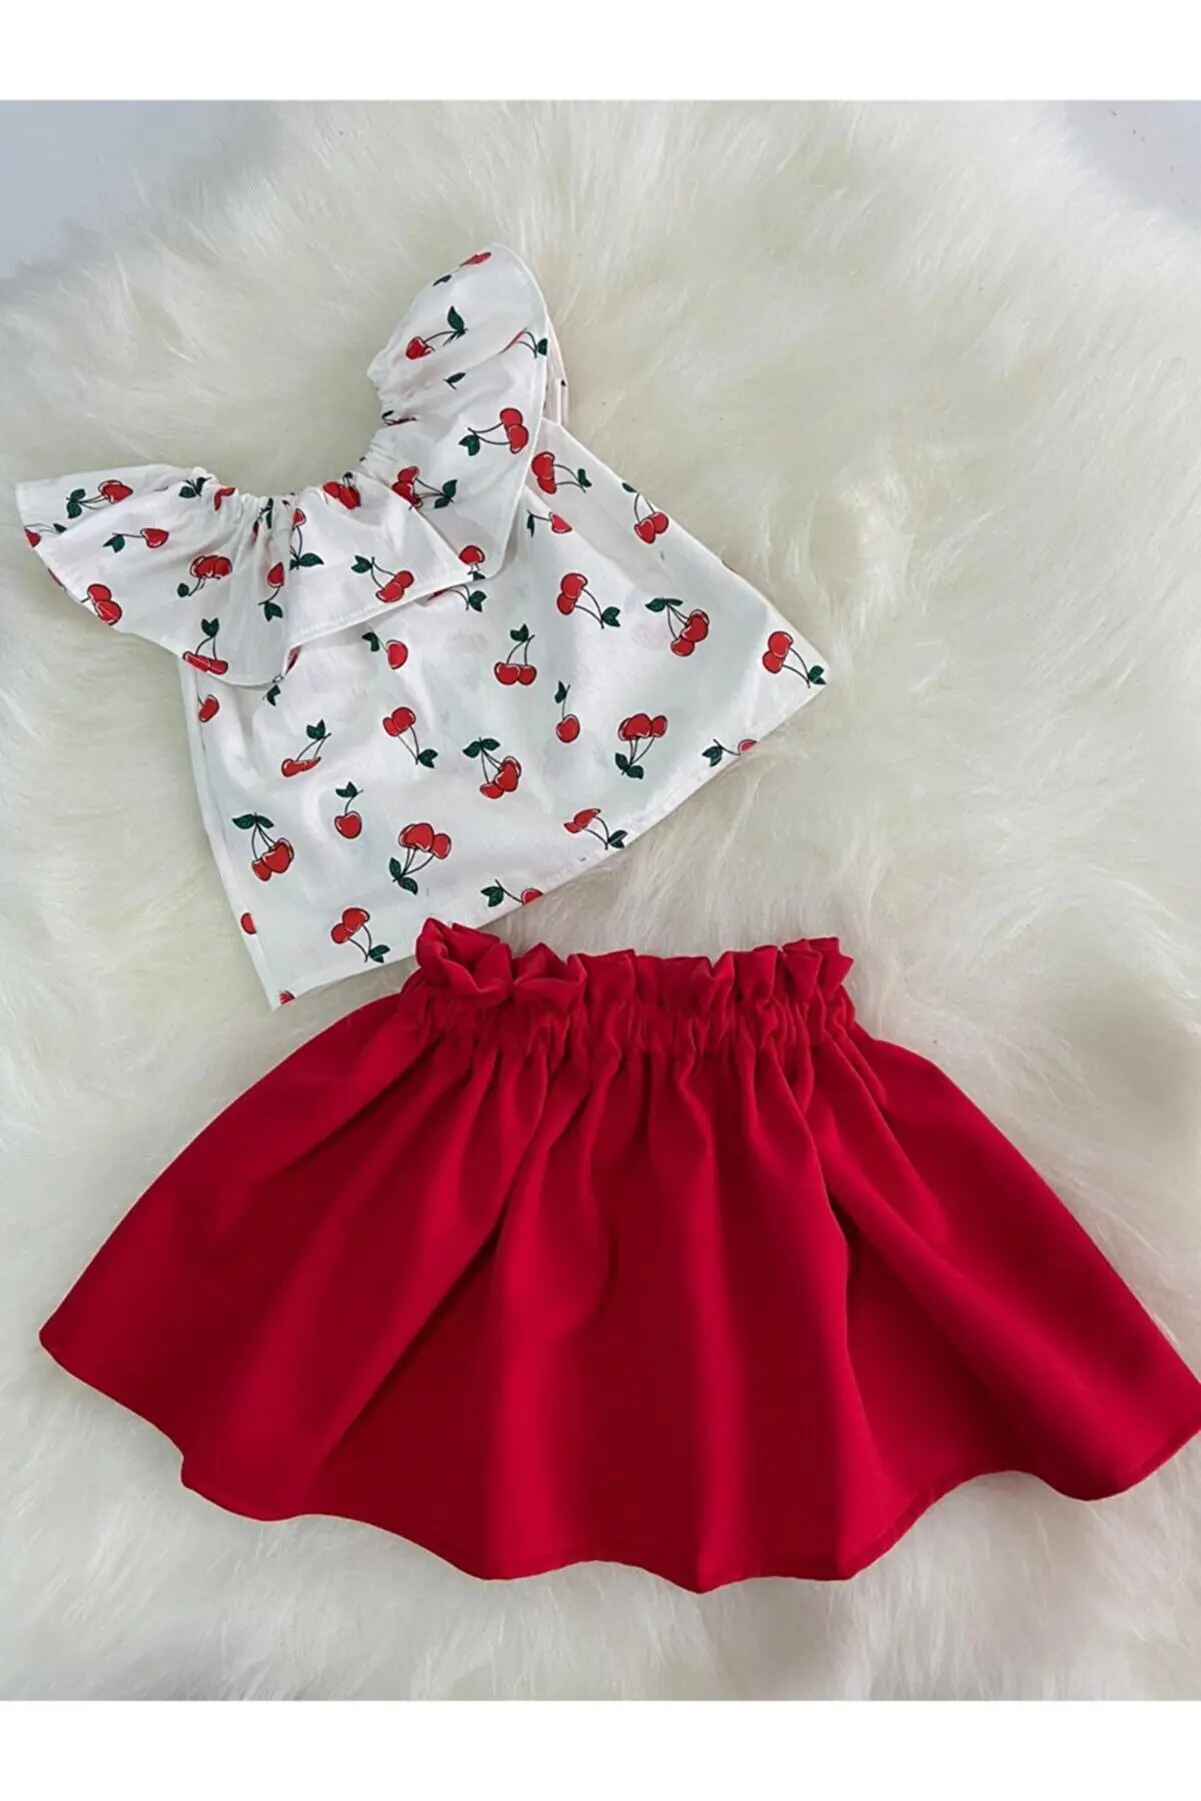 

Fashion Lina Cherry Pattern Skirt Blouse Set Baby Clothing Sweet Strawberry Patterned Jumpsuits Set Newborn Romper